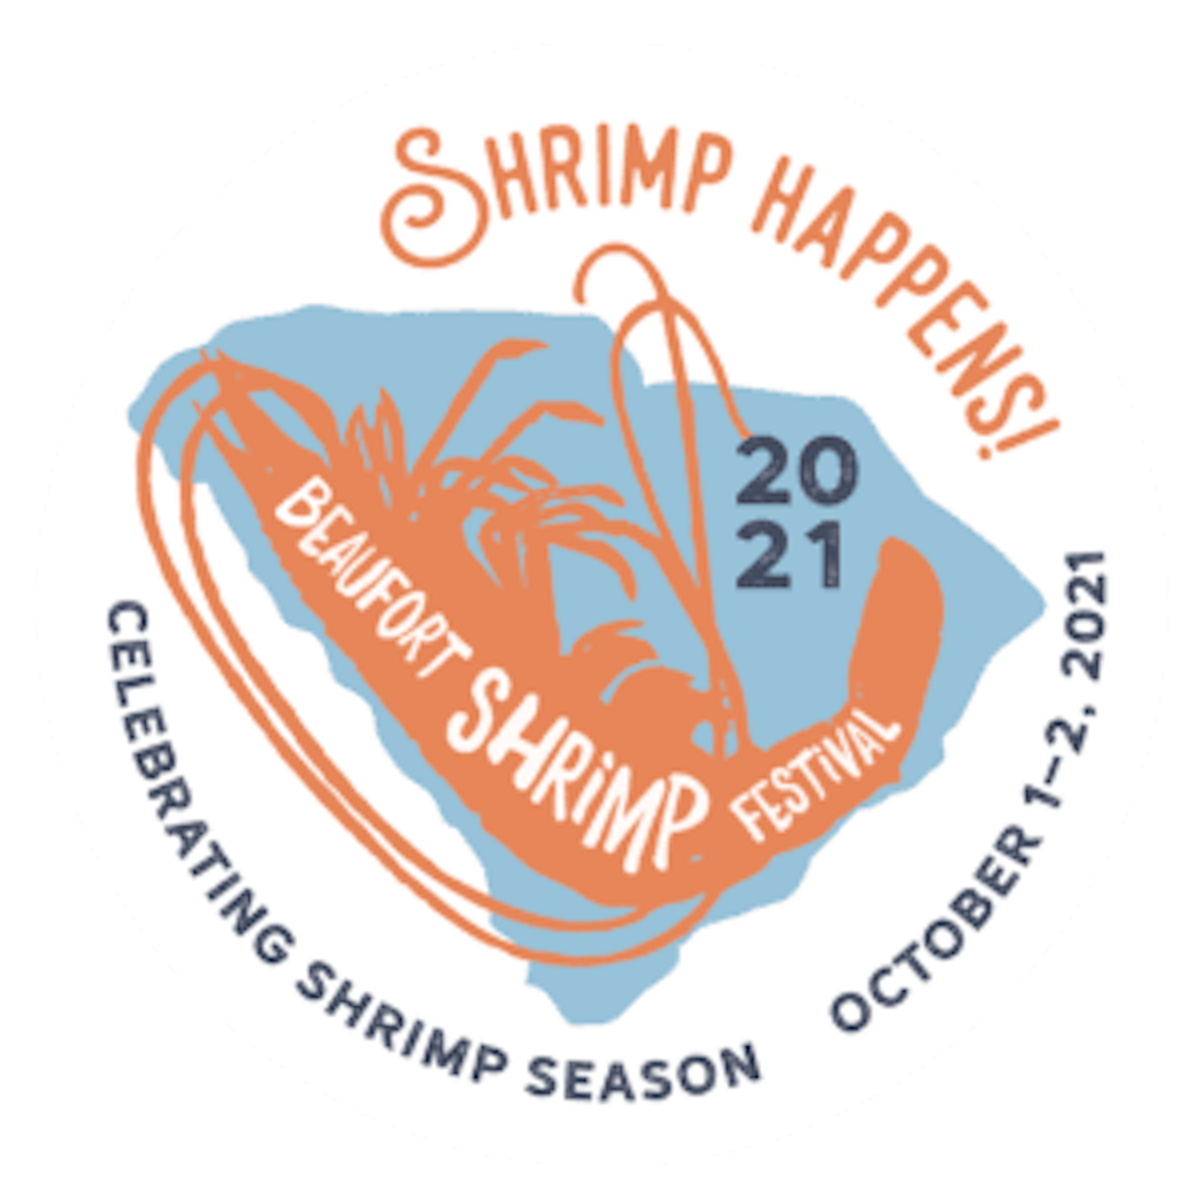 Shrimp Festival back in Beaufort Beaufort South Carolina The Island News